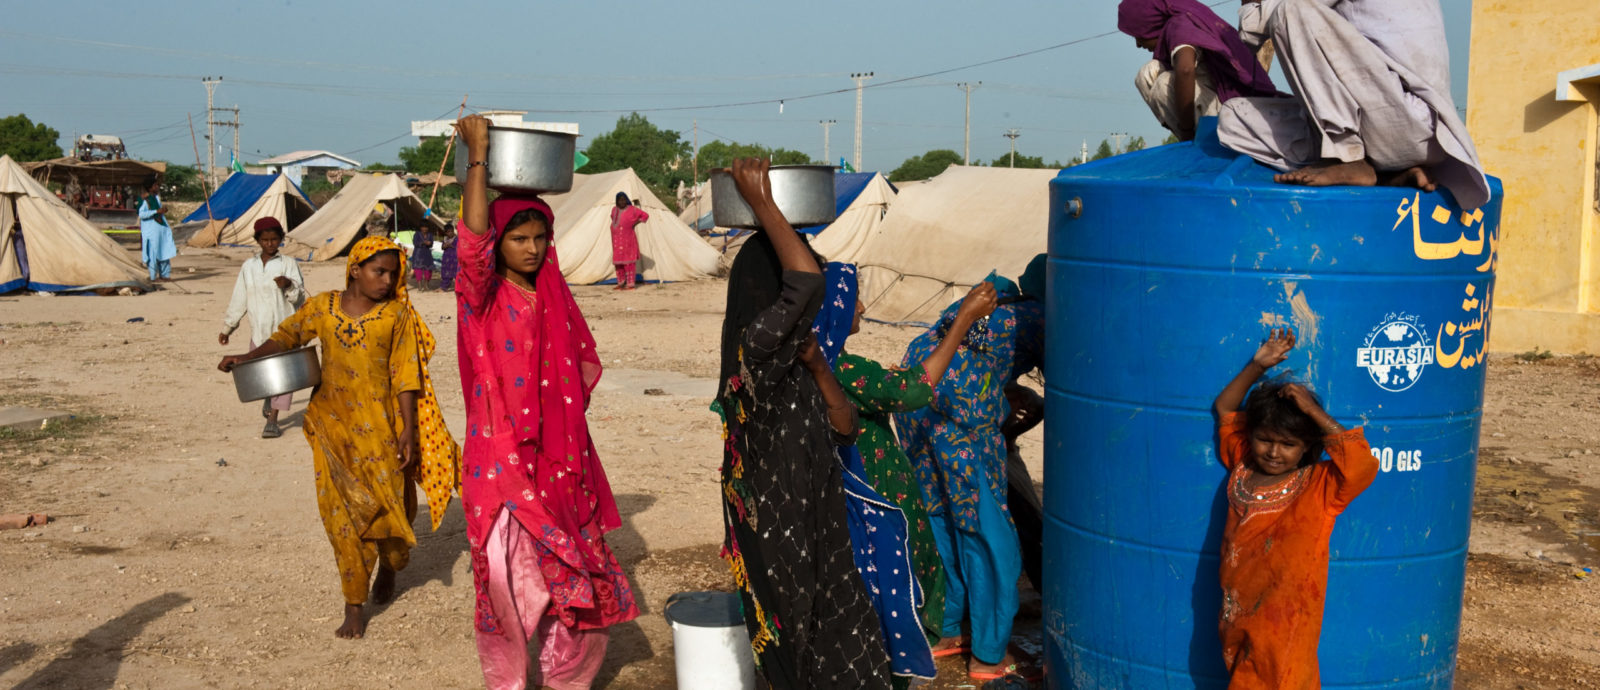 Women displaced by flooding on the outskirts of Thatta, Pakistan. Credit: Gerhard Jörén/Asian Development Bank/Flickr